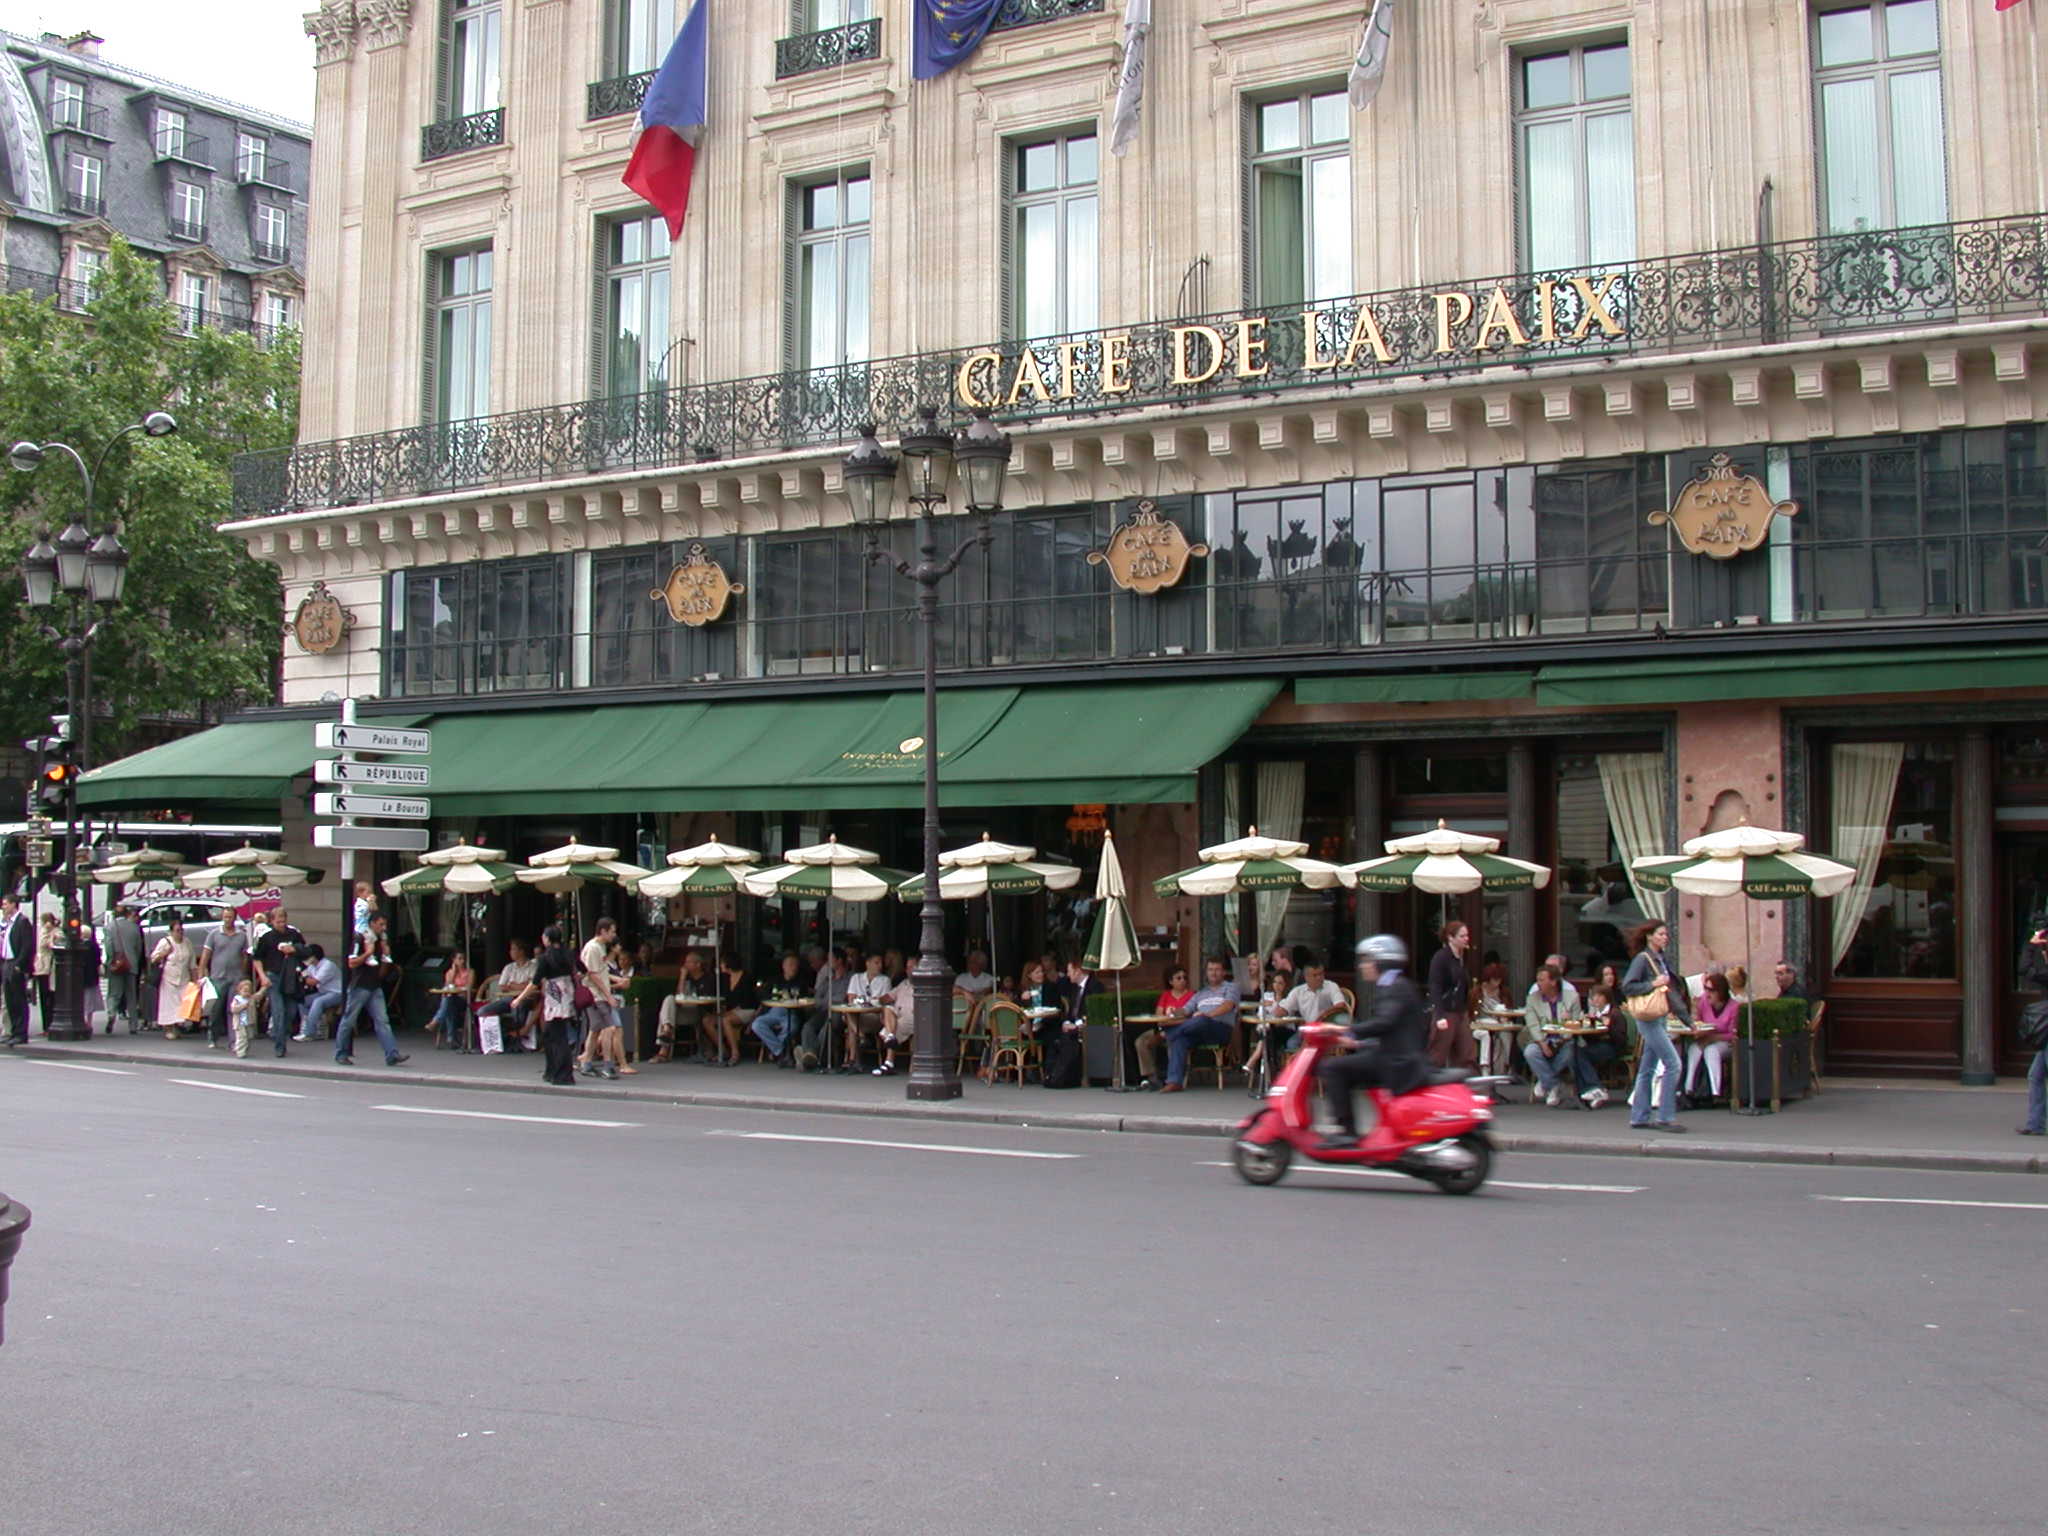 Cafe De La Paix, Paris - hinh anh nhung quan cafe dep nhat the gioi